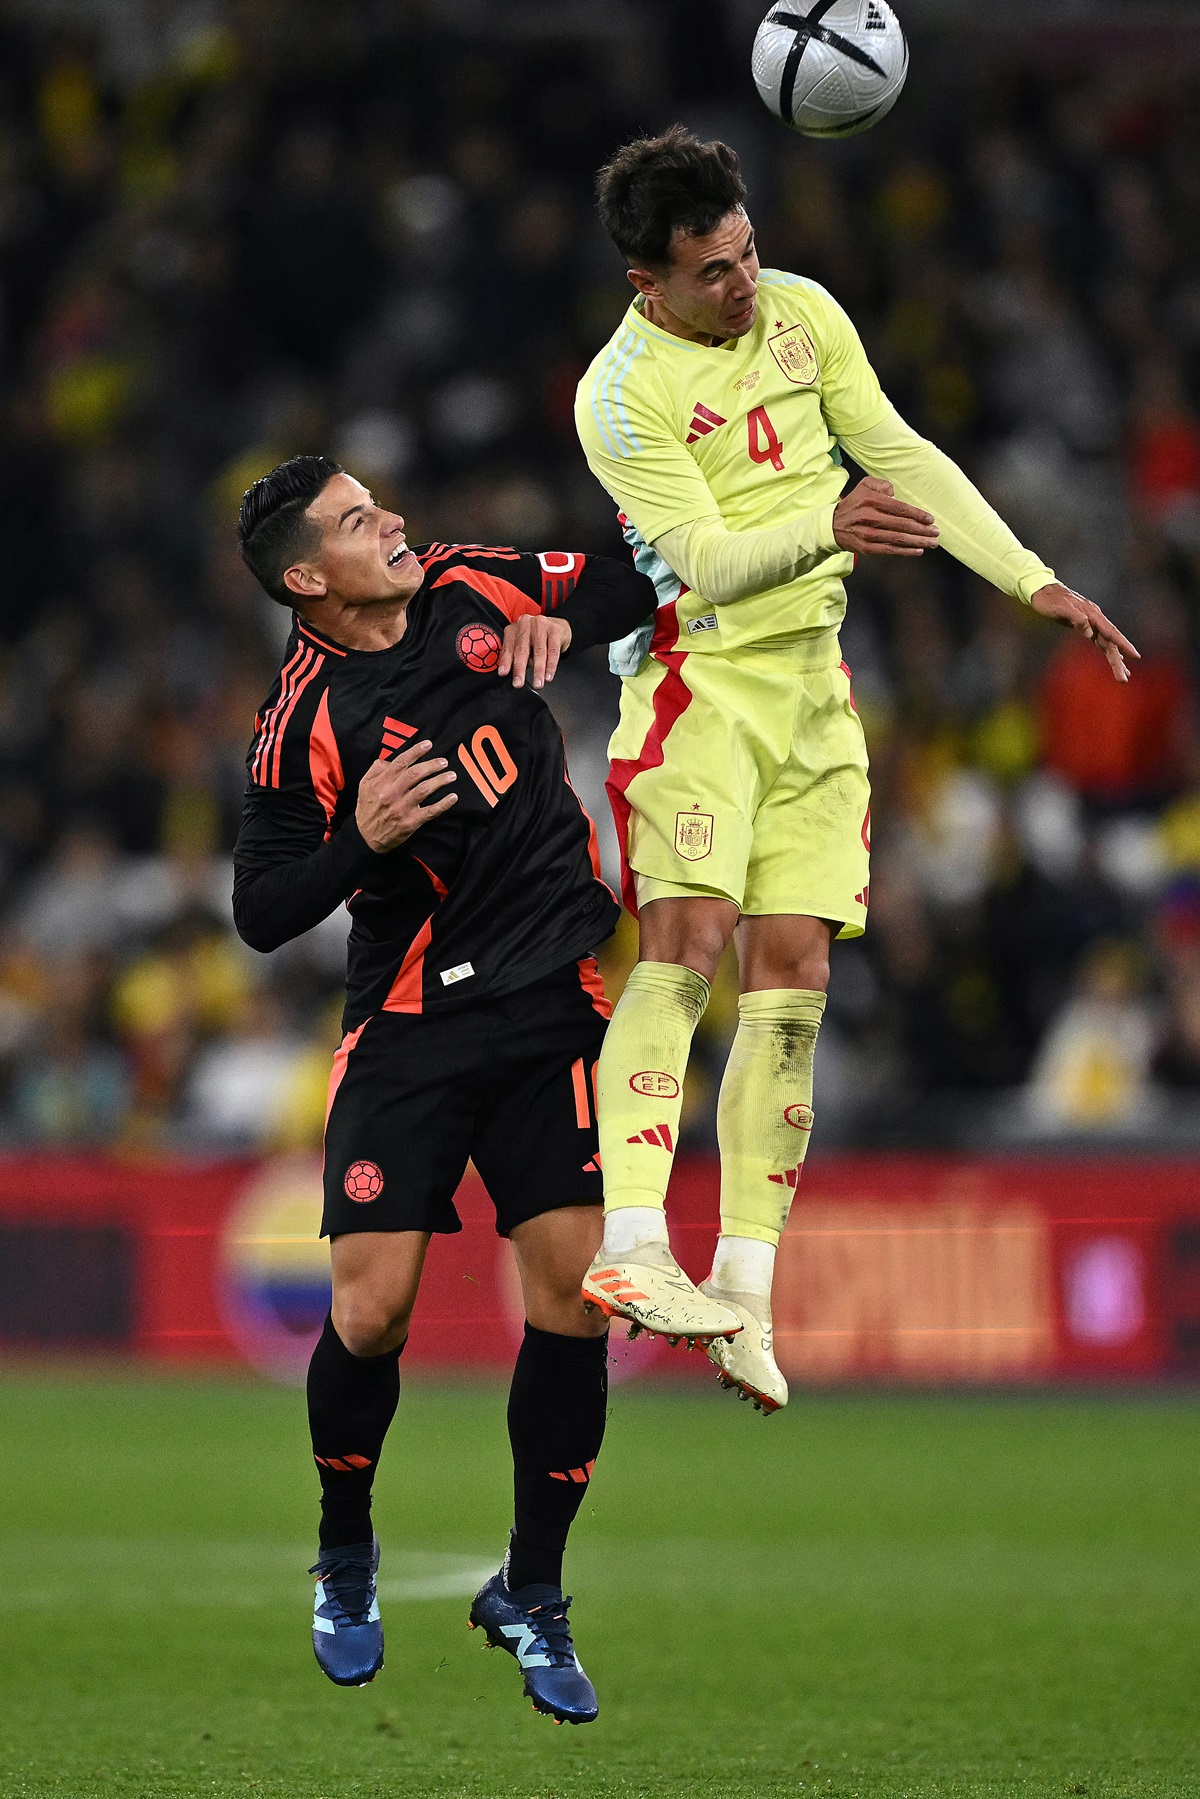 Colombia vuelve a jugar la próxima semana contra Rumania.